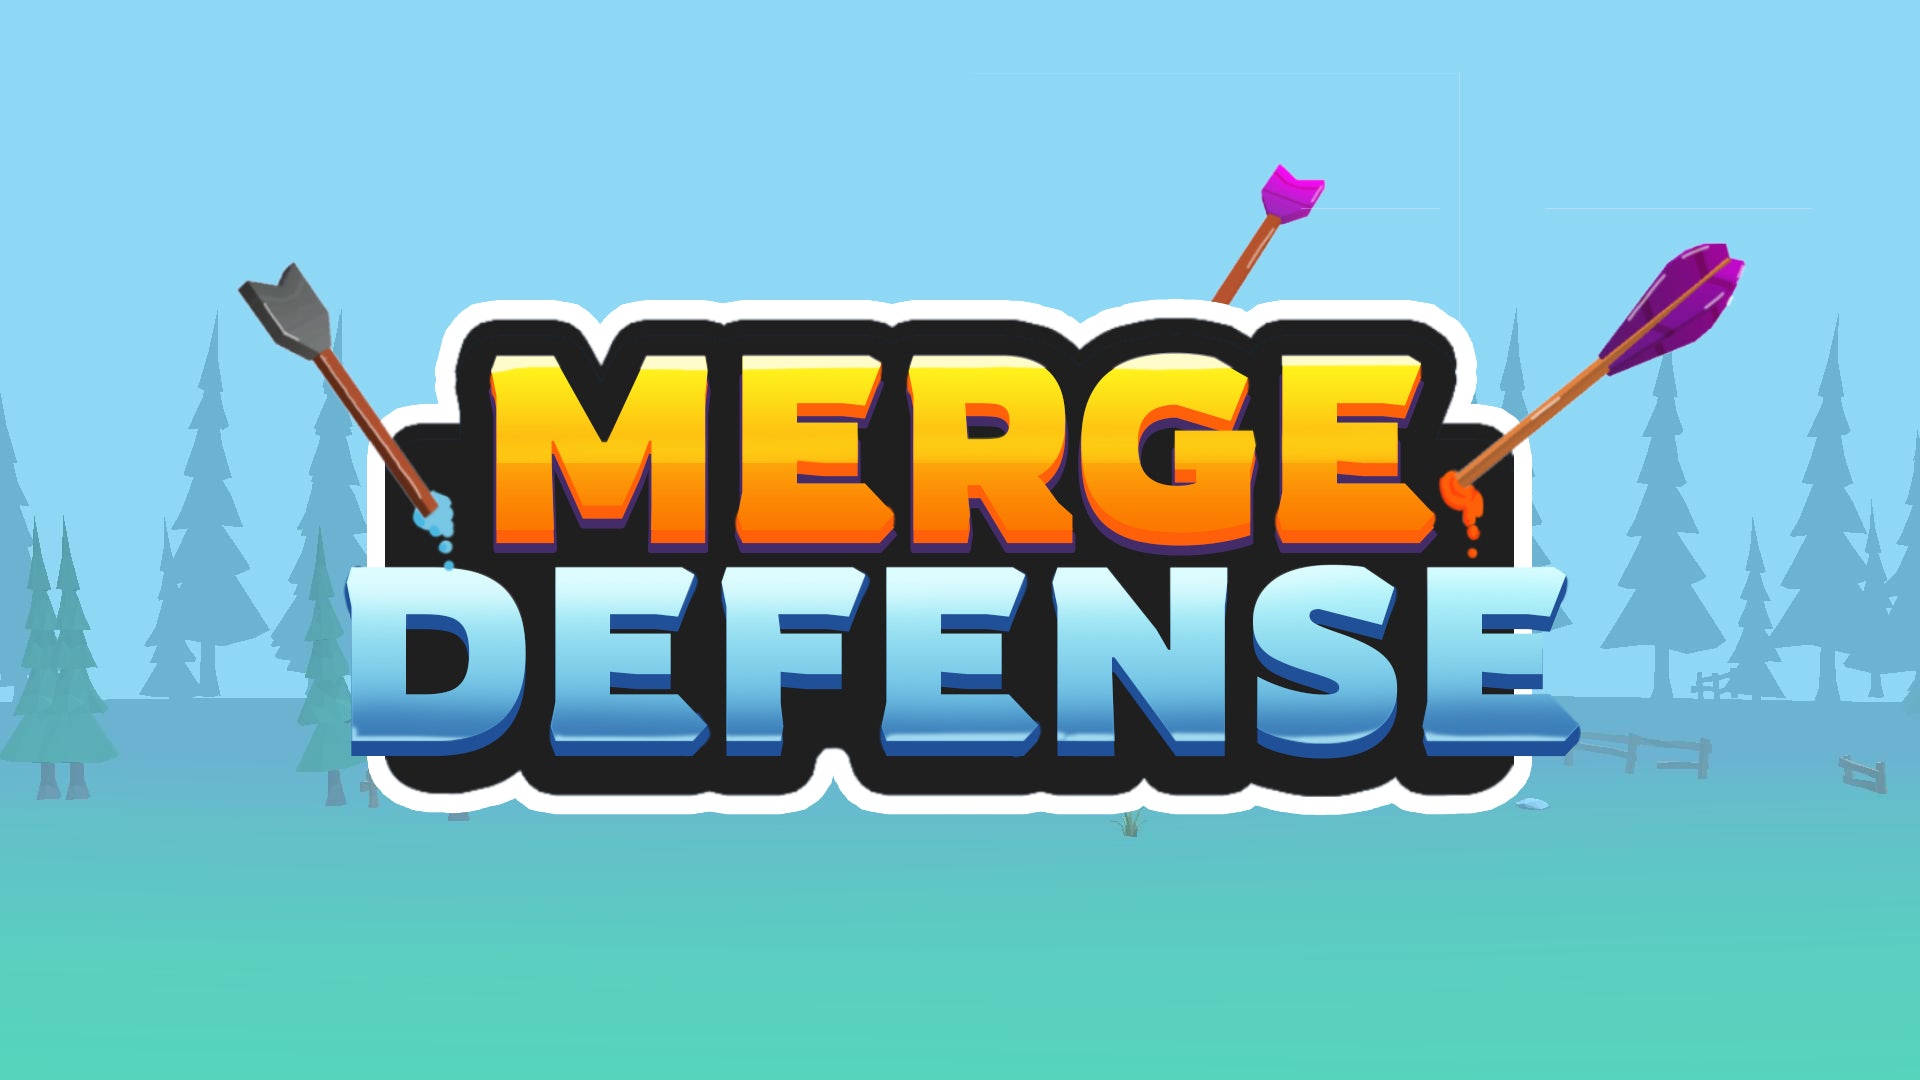 Merge Defense